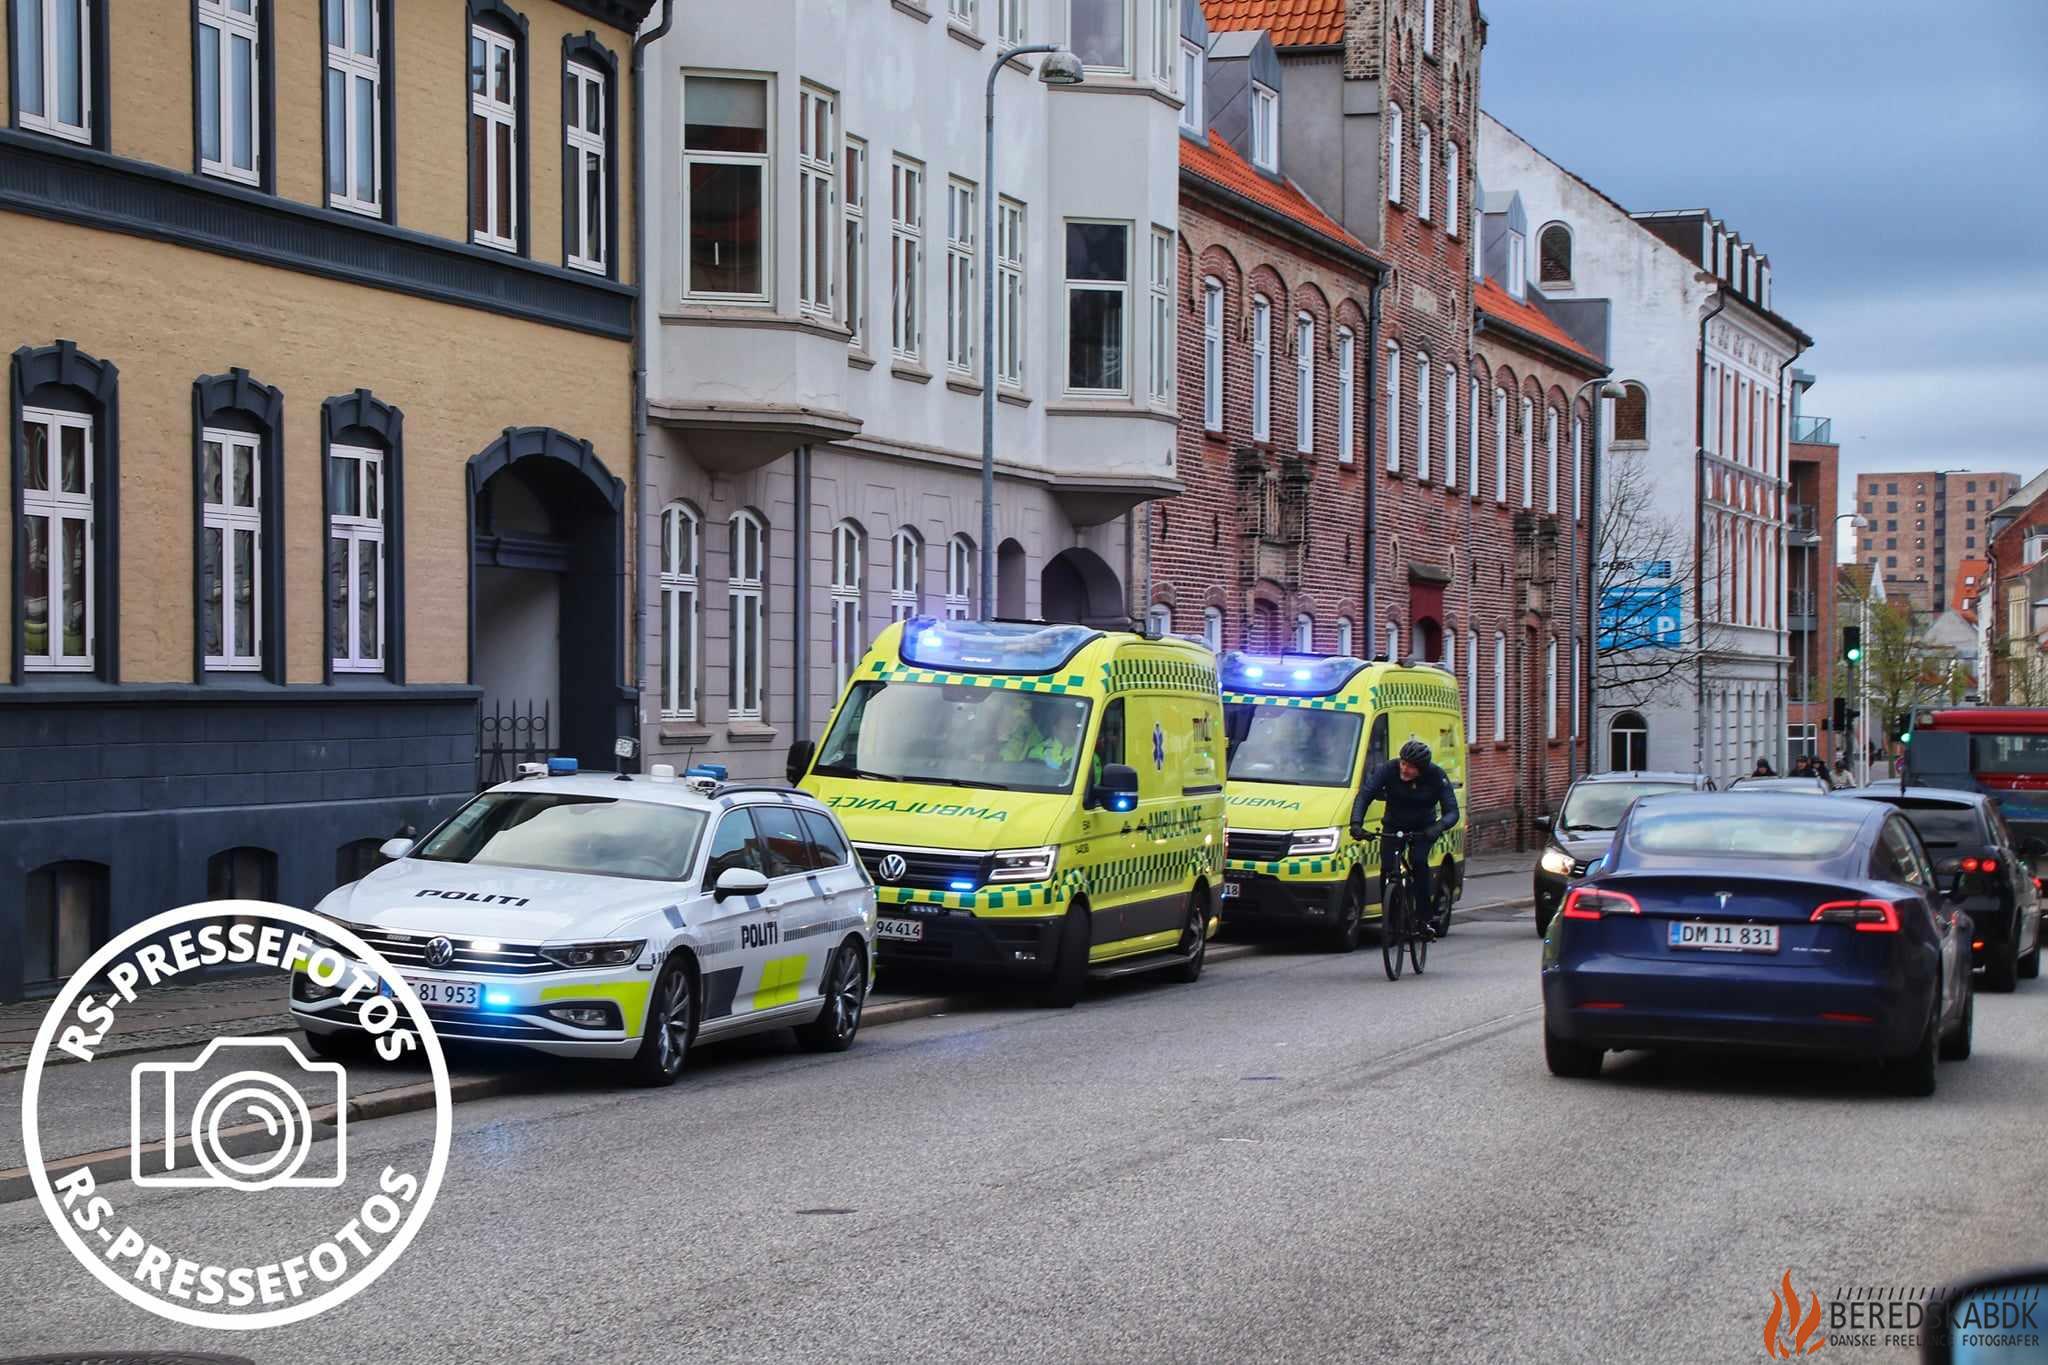 17-04-24 Mindre færdselsuheld i Horsens